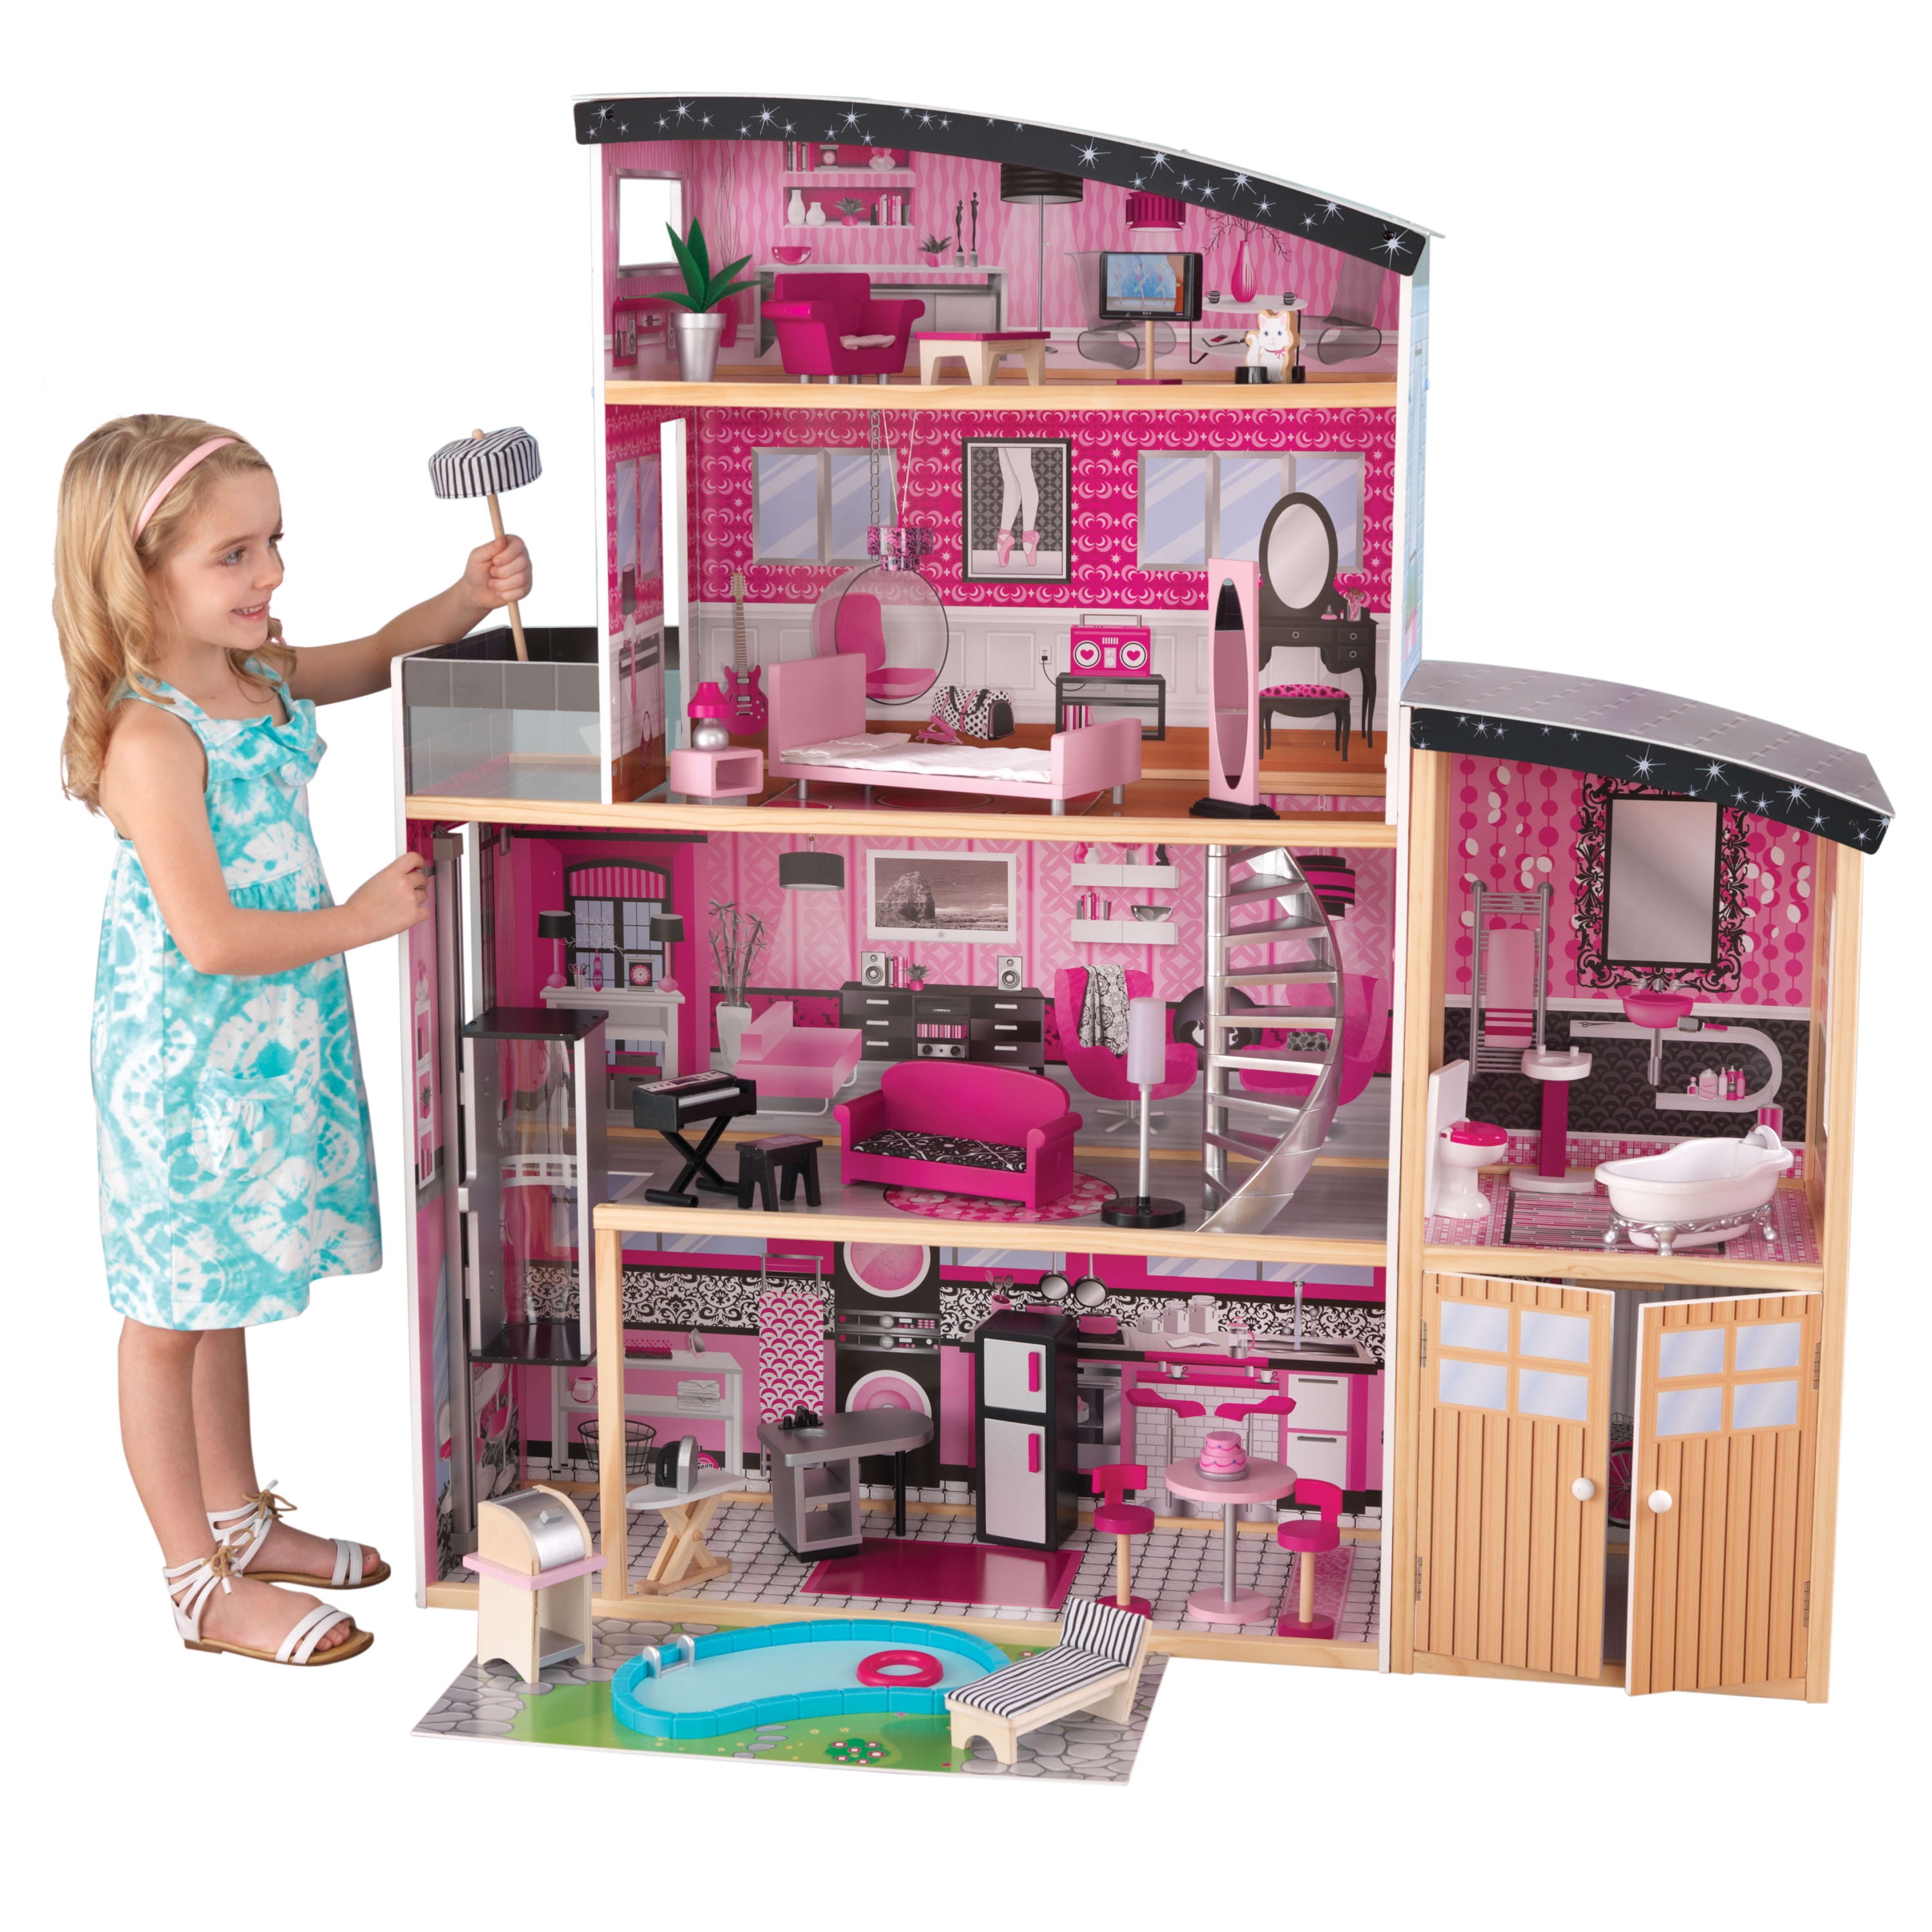 KidKraft Sparkle Wooden Dollhouse with Accessories - Walmart.com